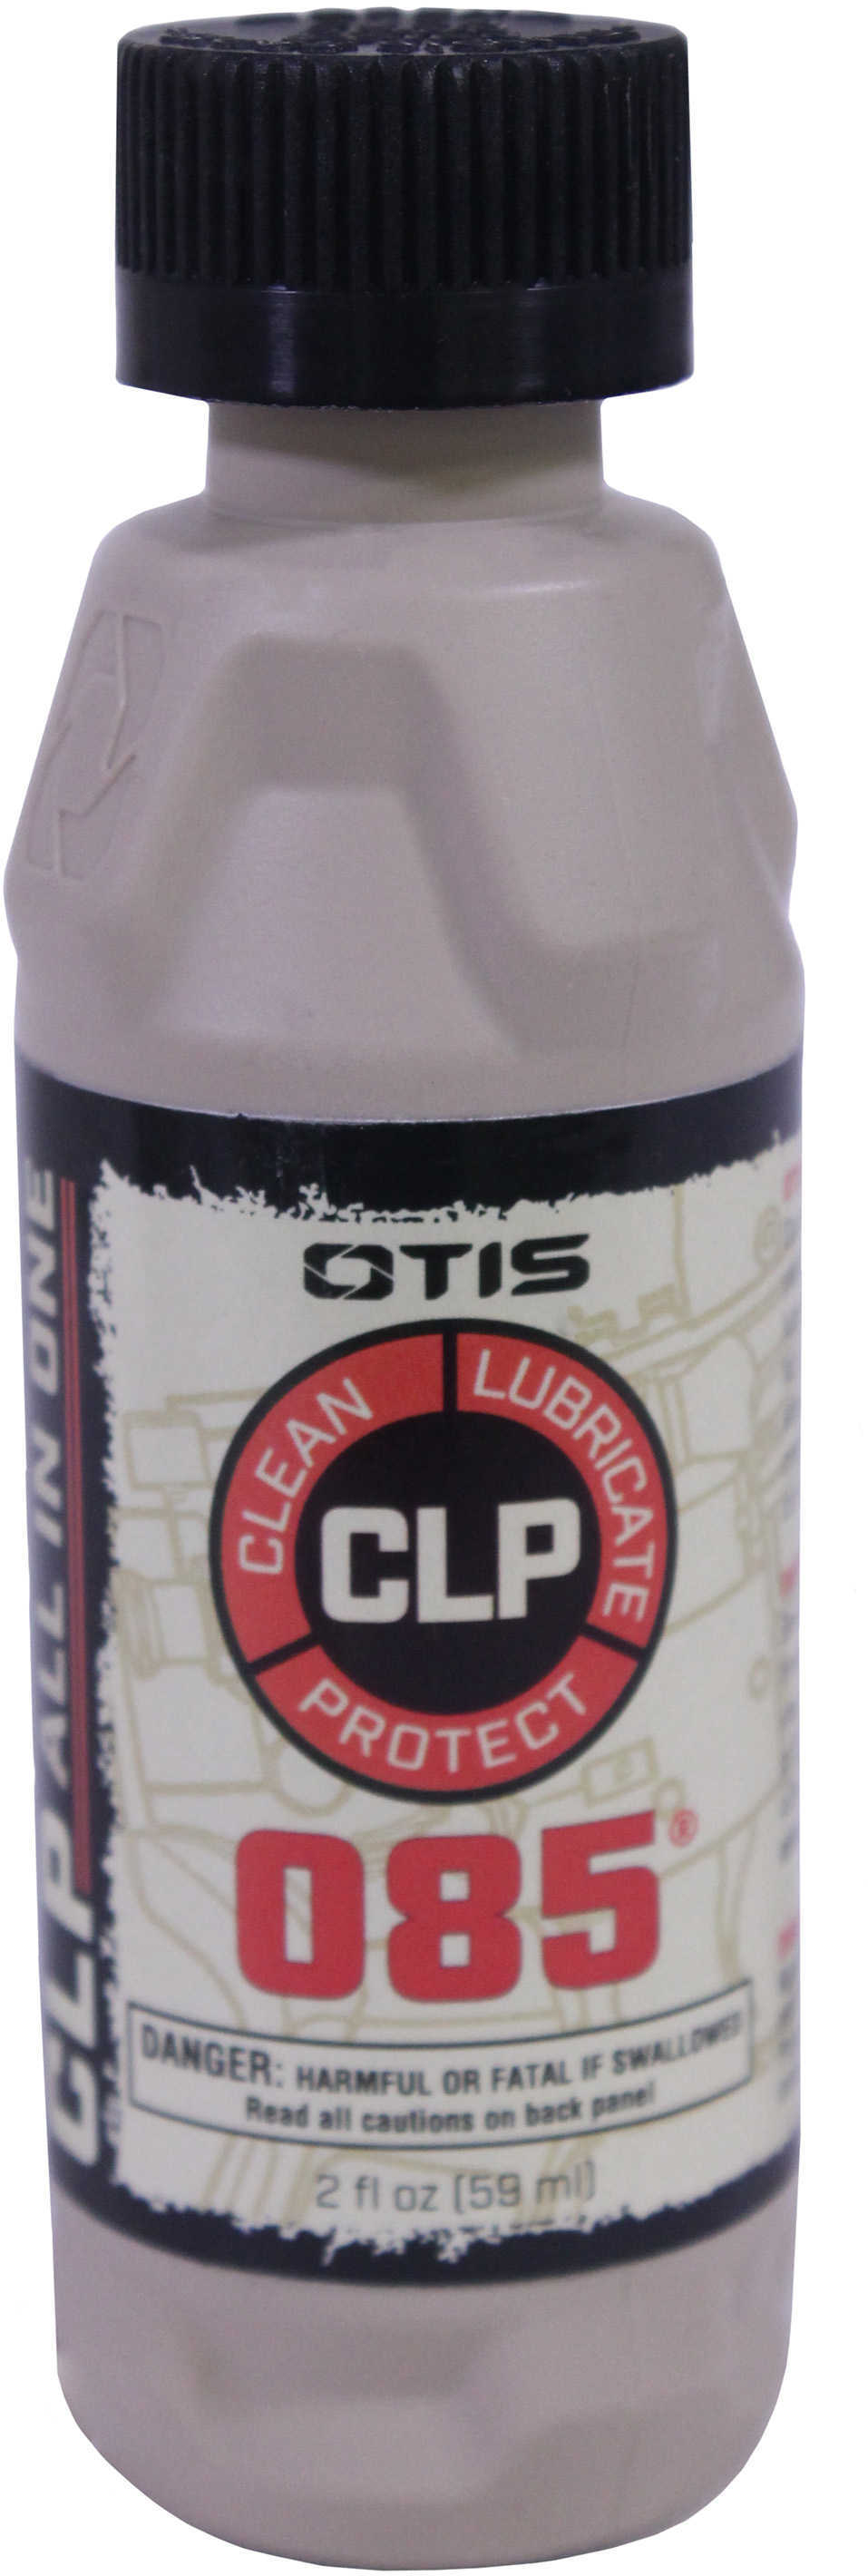 Otis Technologies O85 Ultra Bore Solvent, 2 oz Bottle Md: IP-902-085